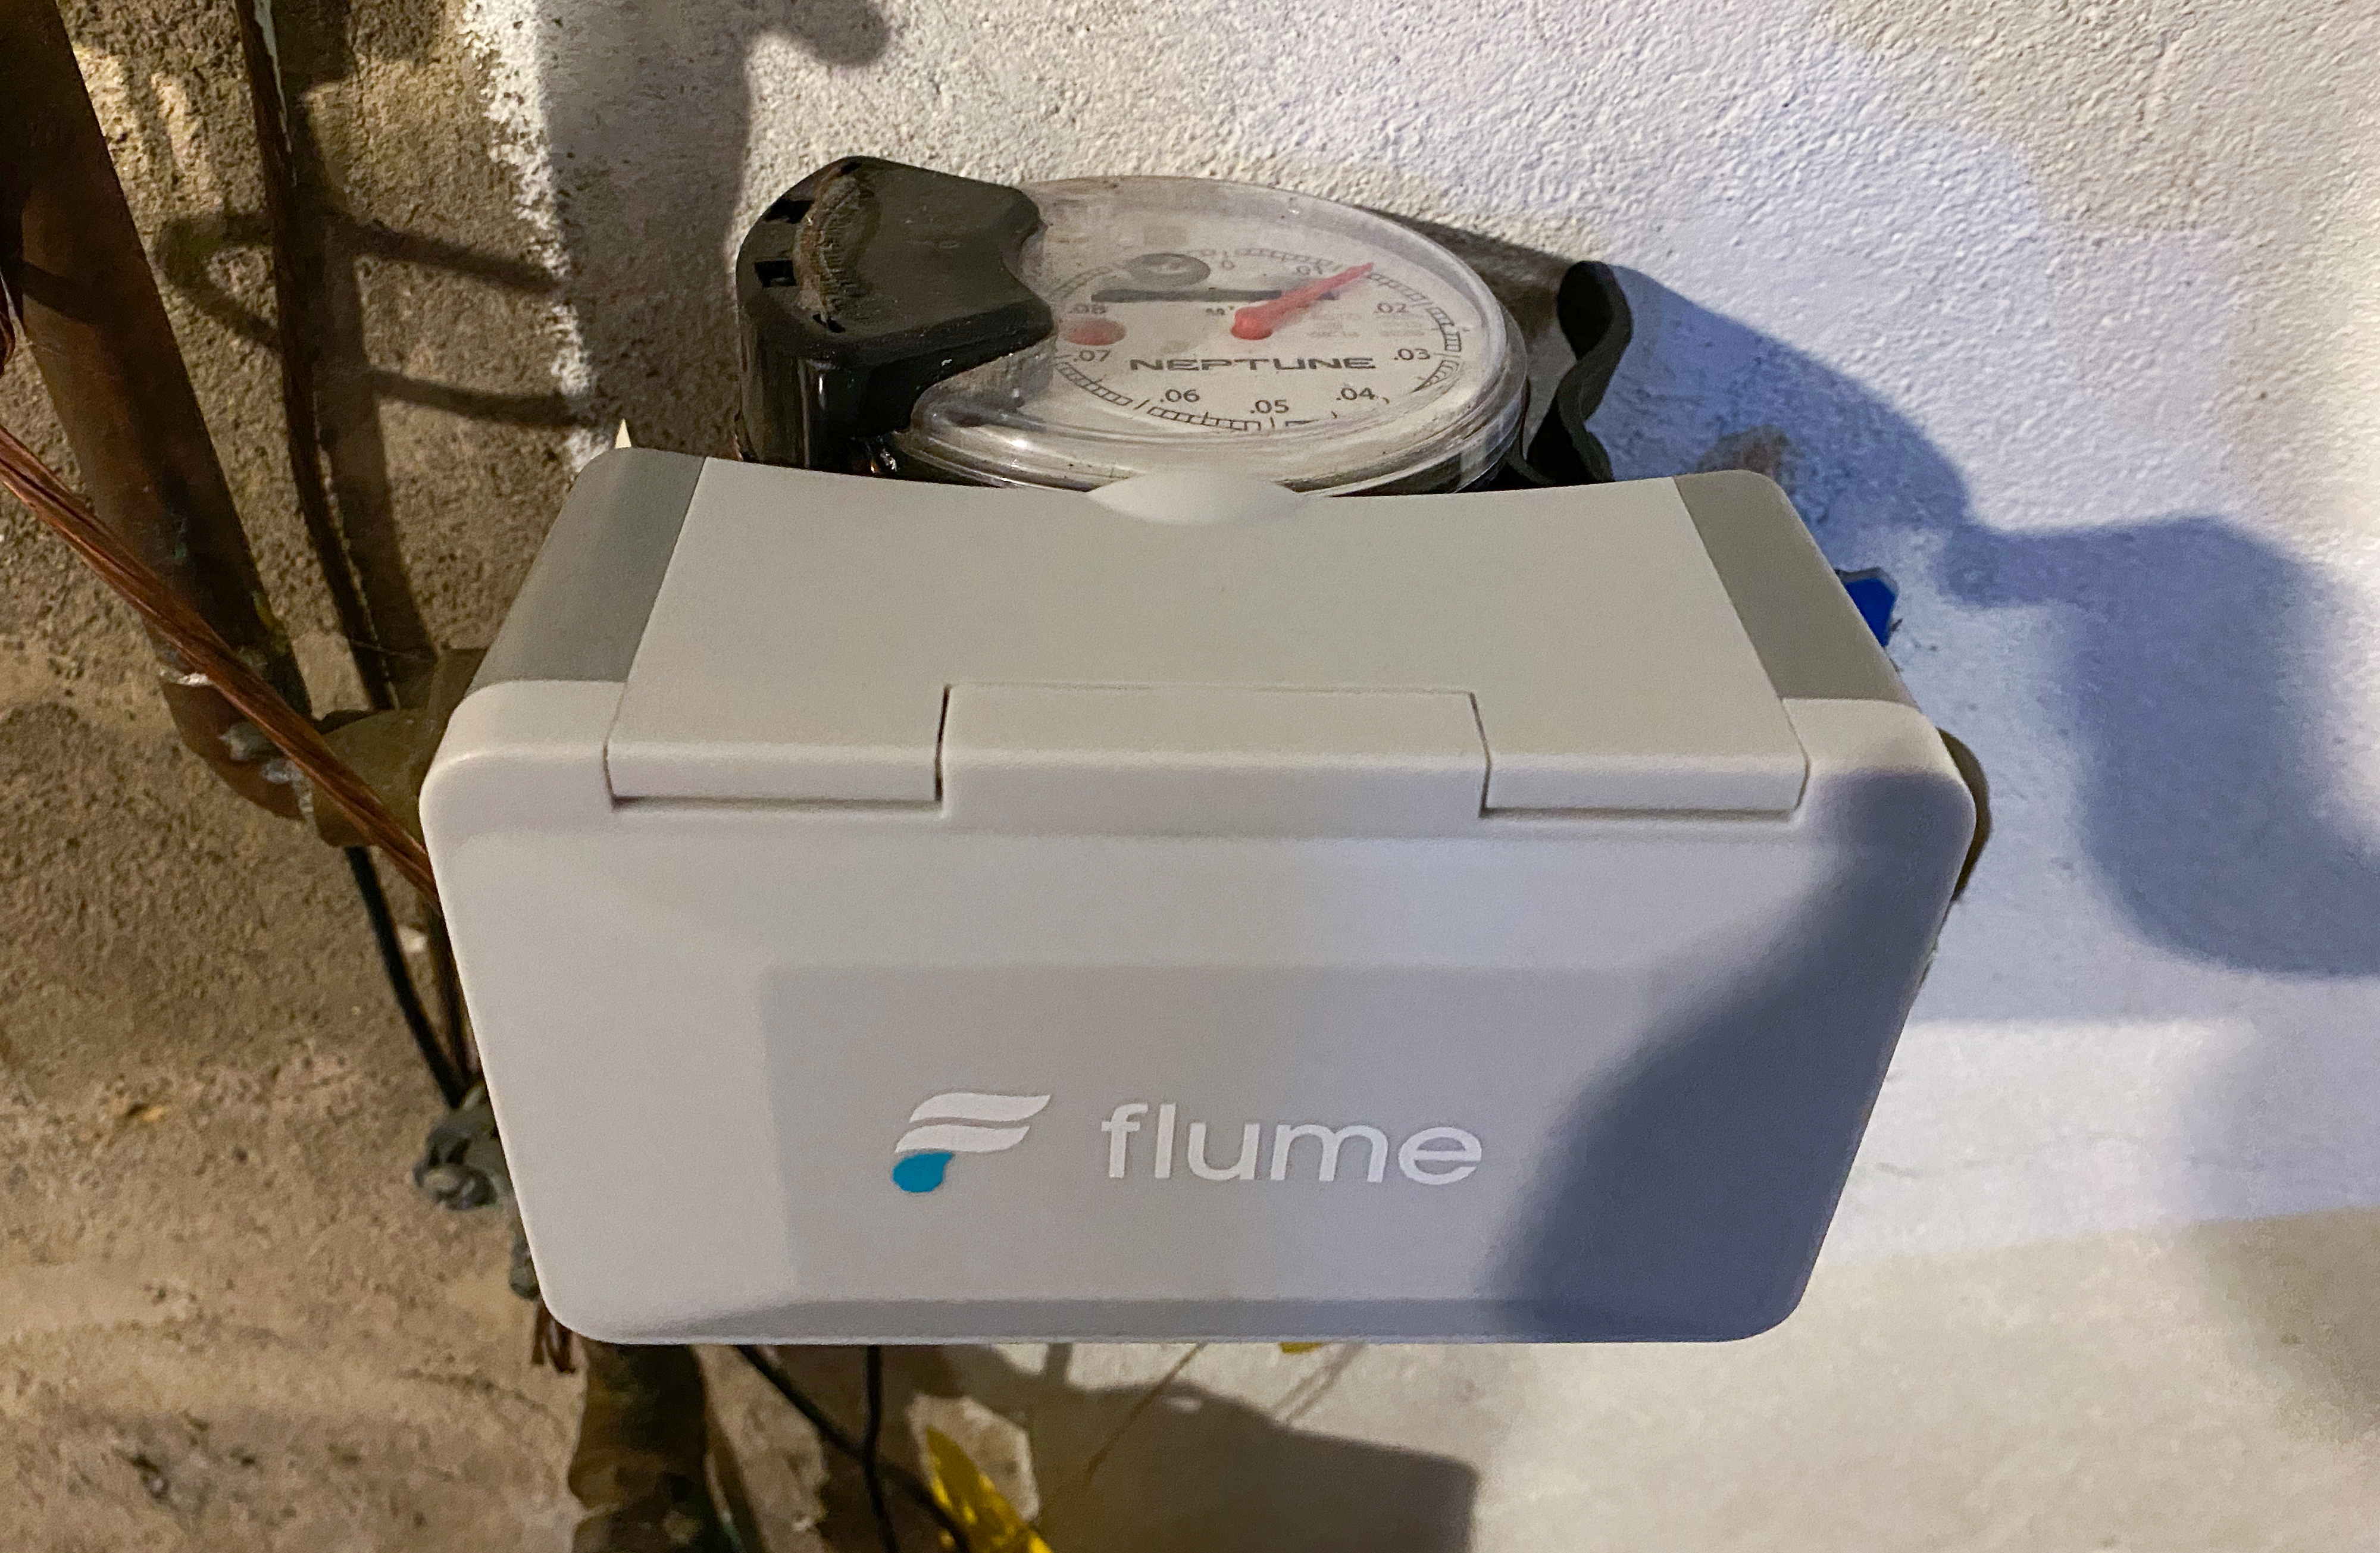 flume water sensor change batteries